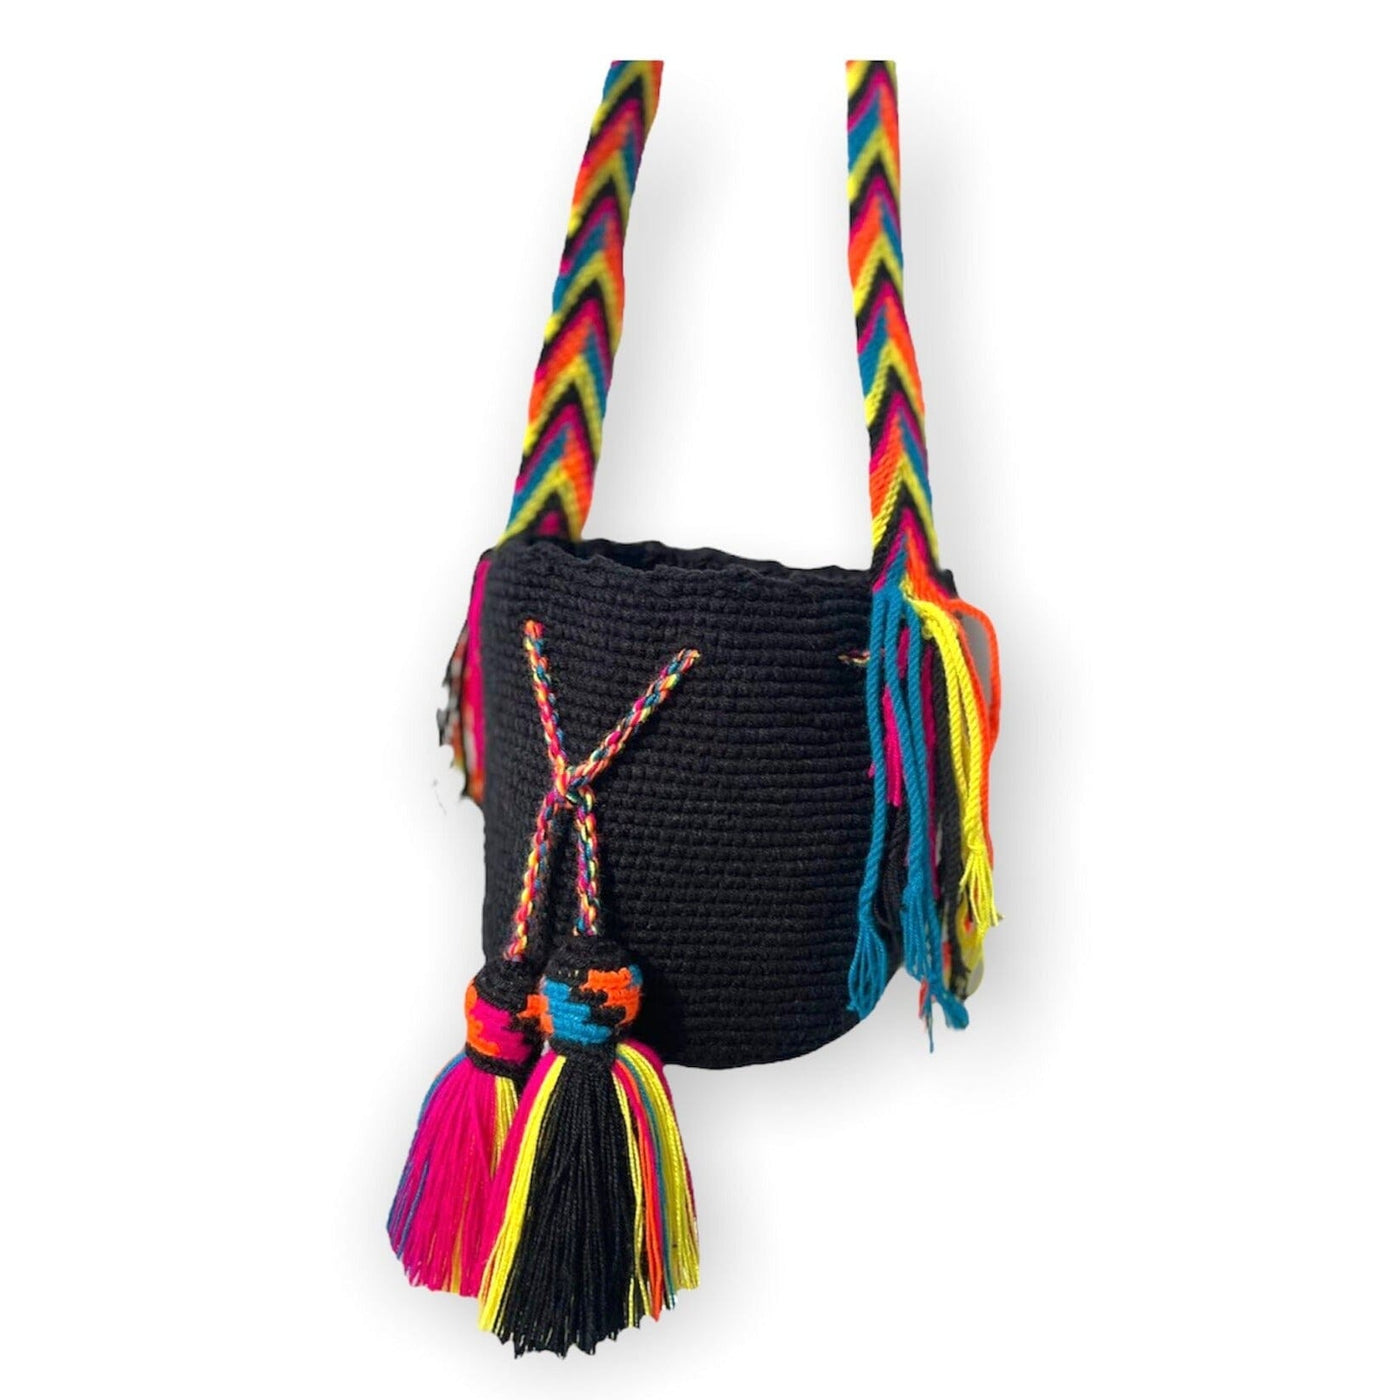 Cute Beach Bag for Summer Vacation | Neon Small Crossbody Bag for Girls Black Orange